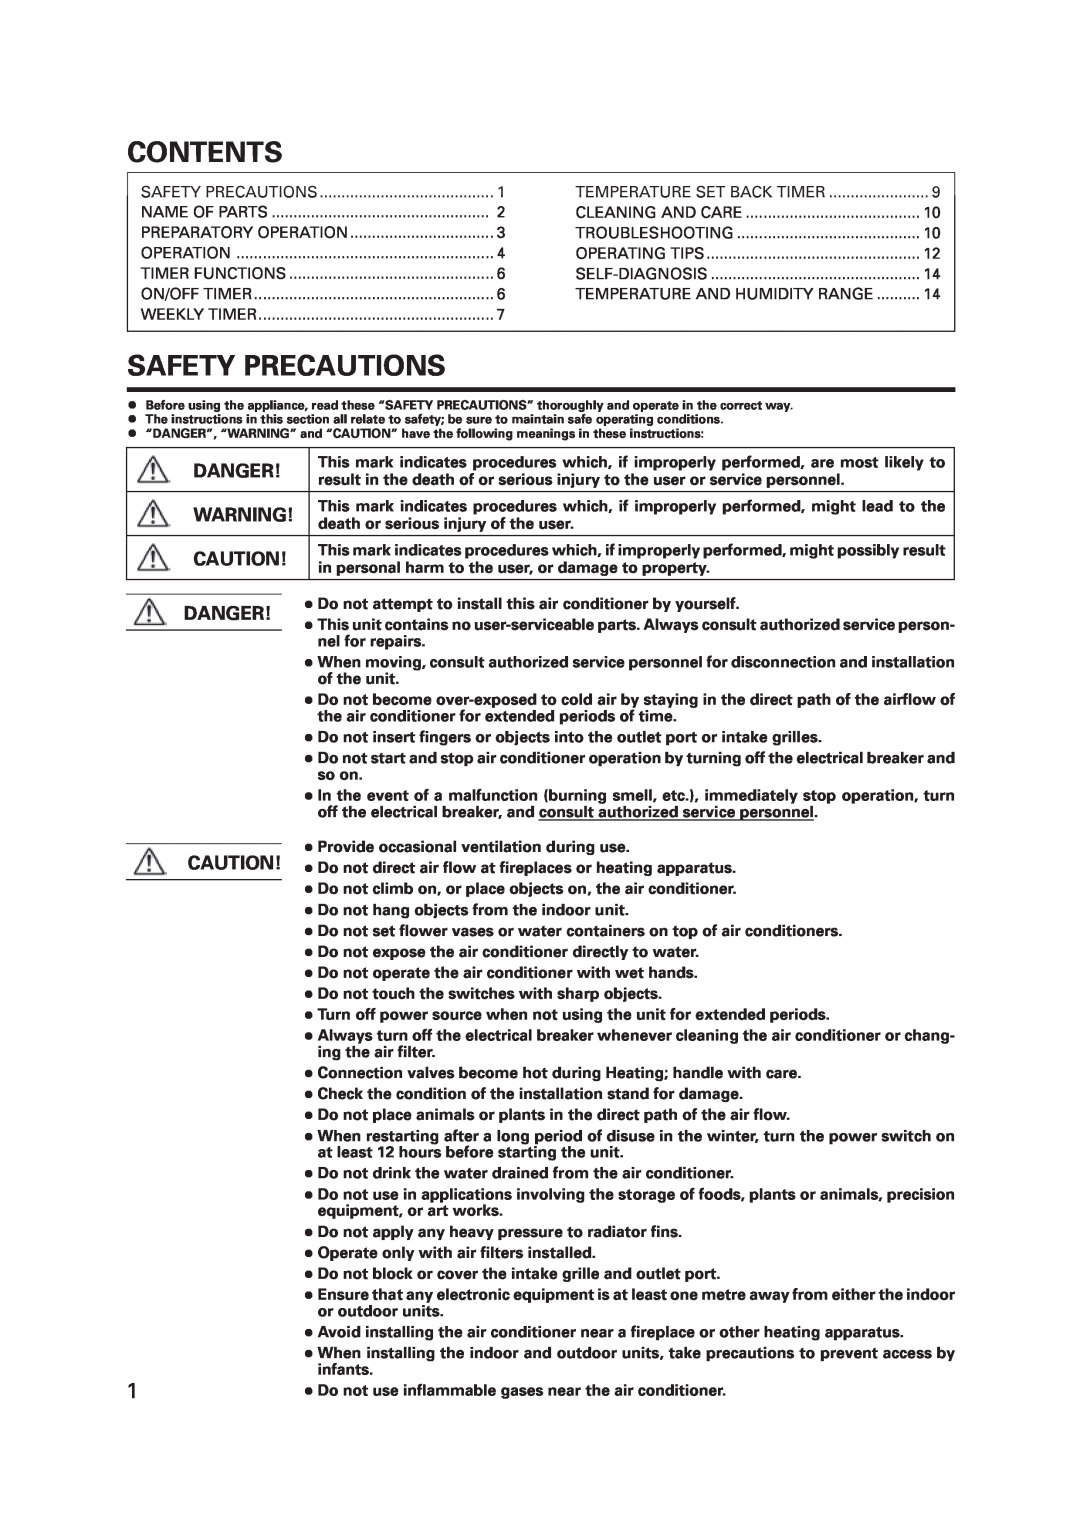 Fujitsu R410A operation manual Contents, Safety Precautions, Danger 